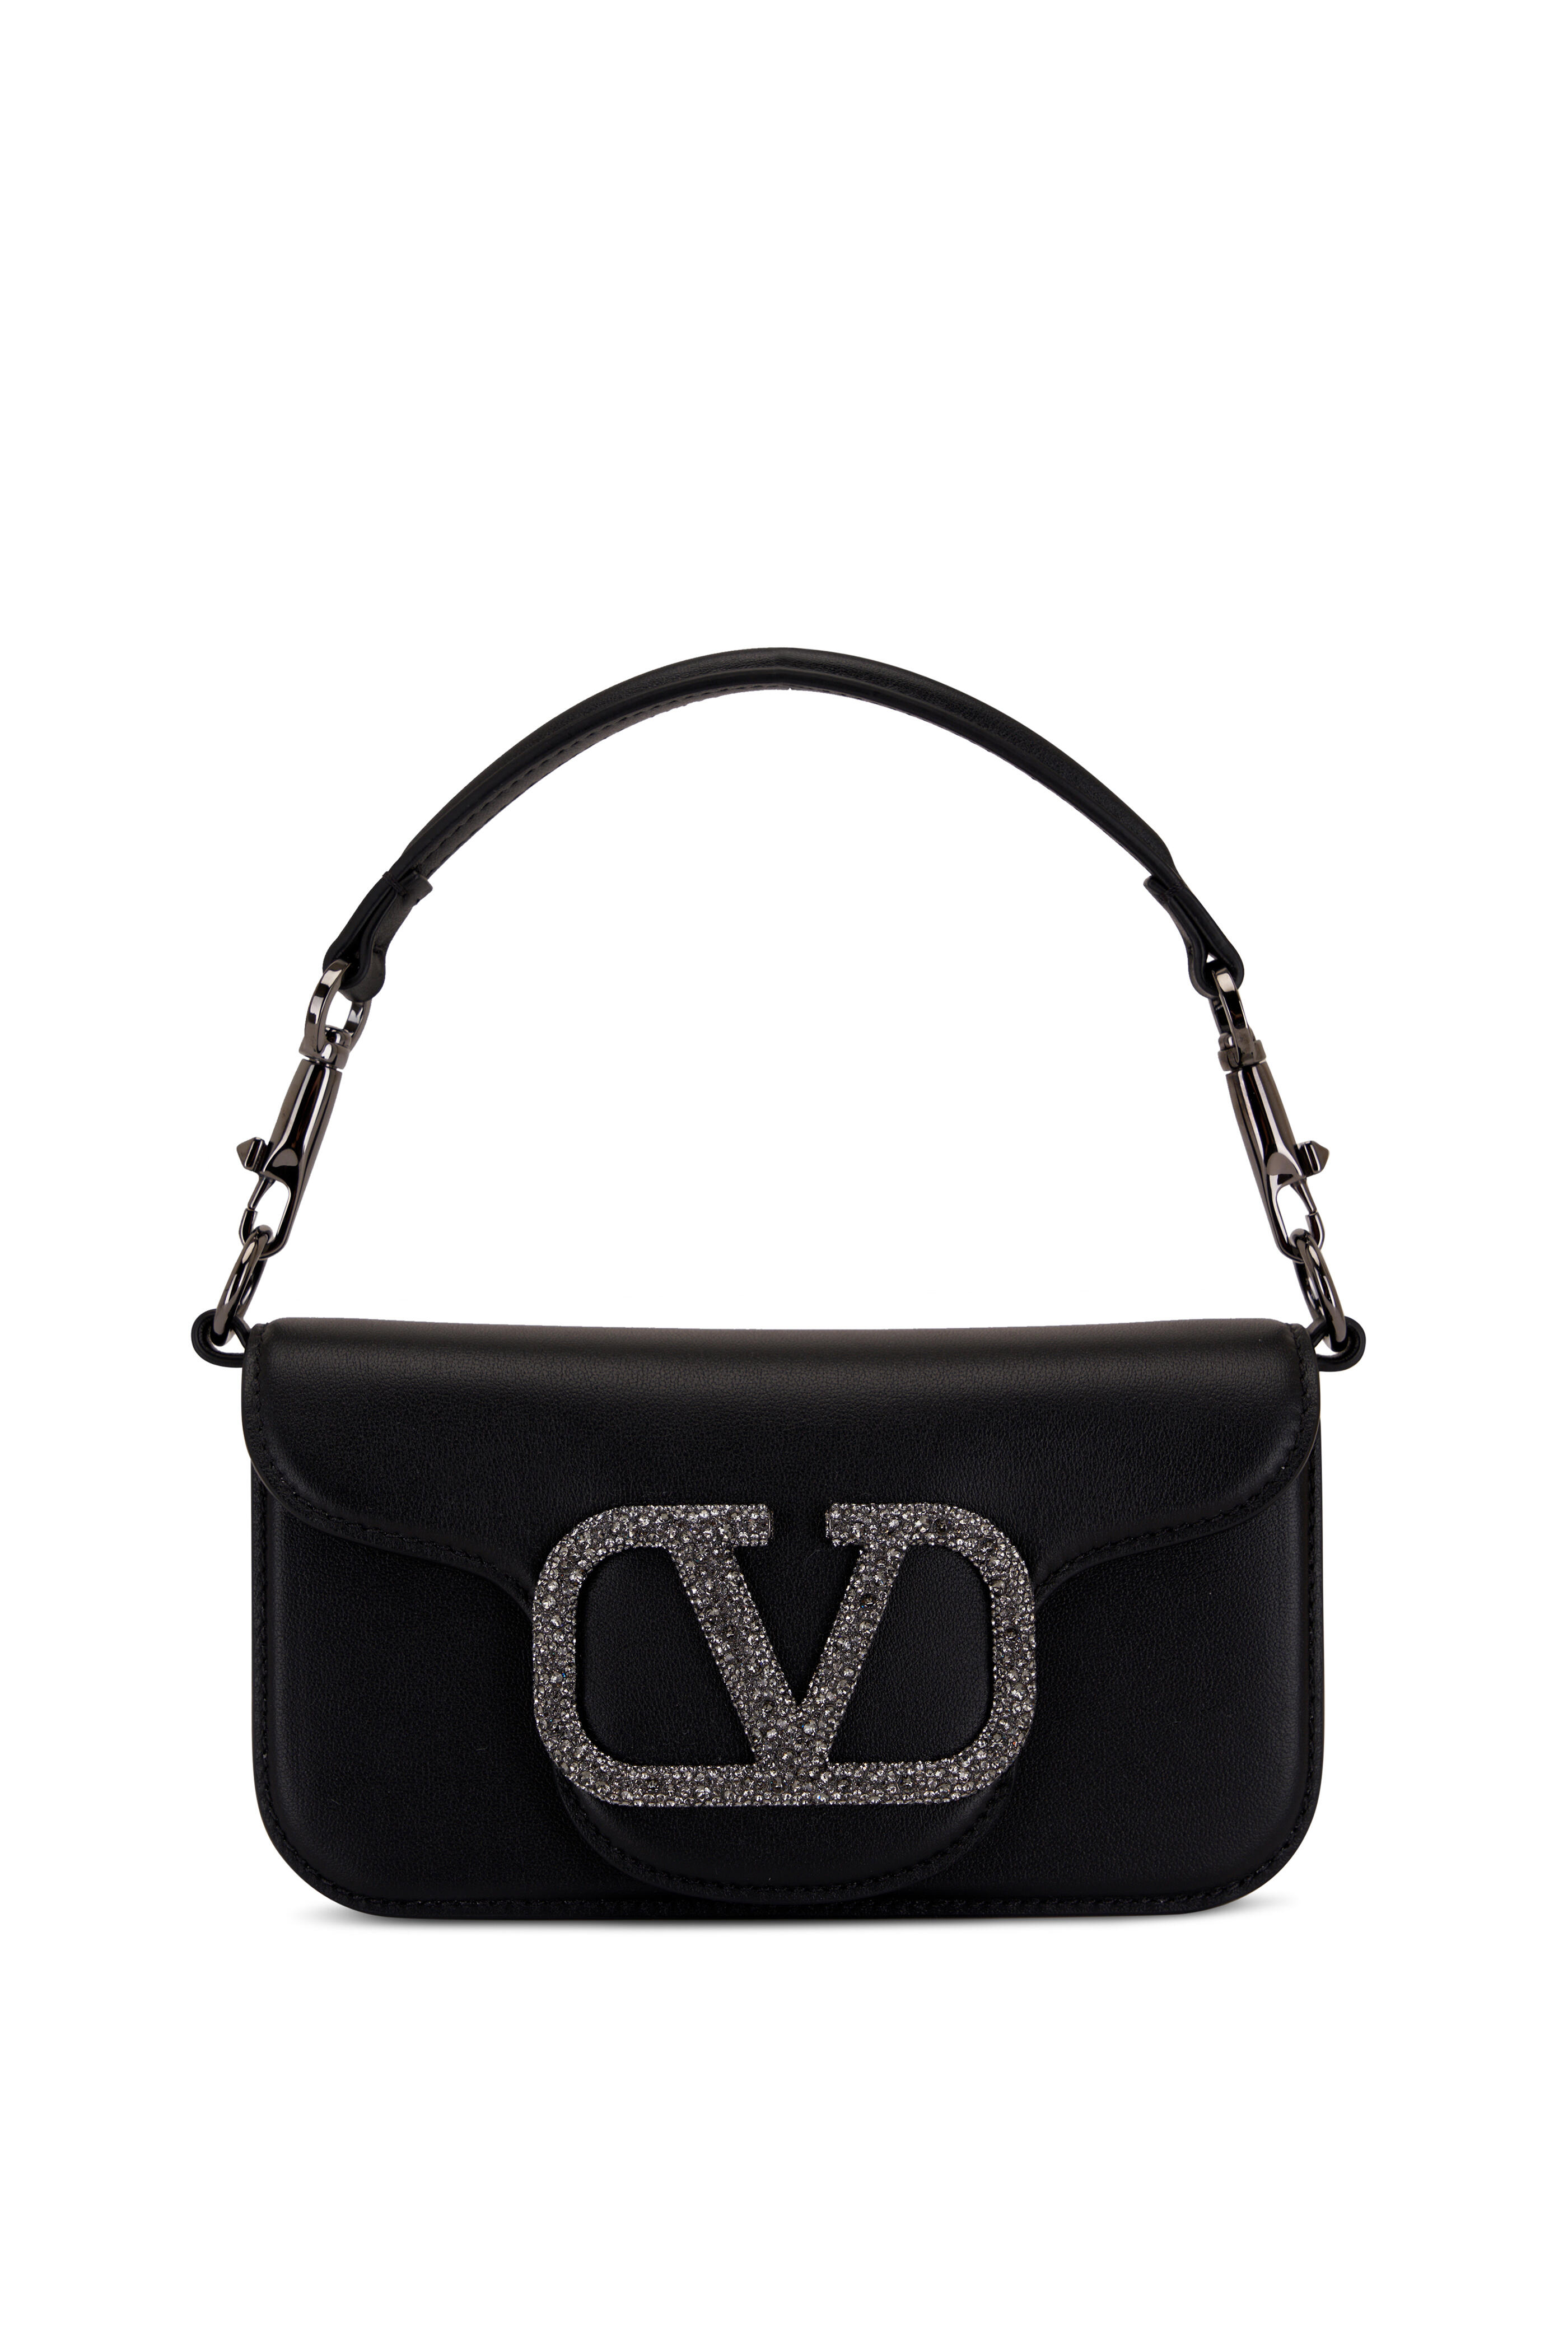 Valentino, Bags, Valentino Swarovski Crystal Bag